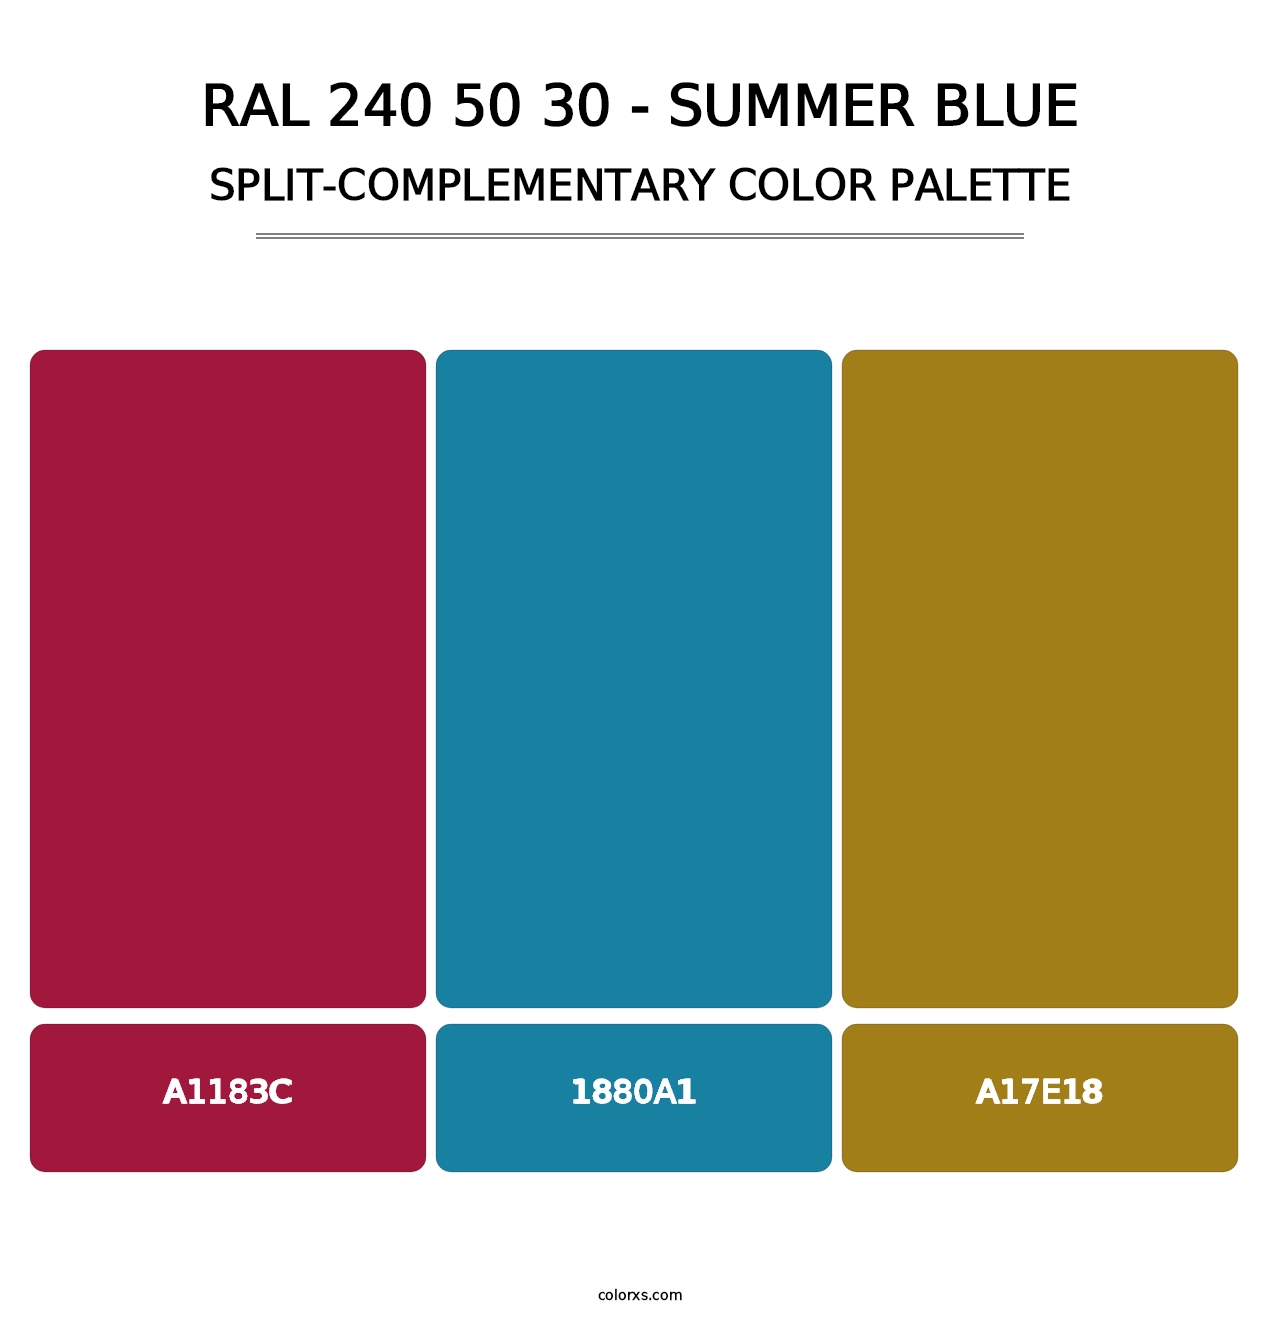 RAL 240 50 30 - Summer Blue - Split-Complementary Color Palette